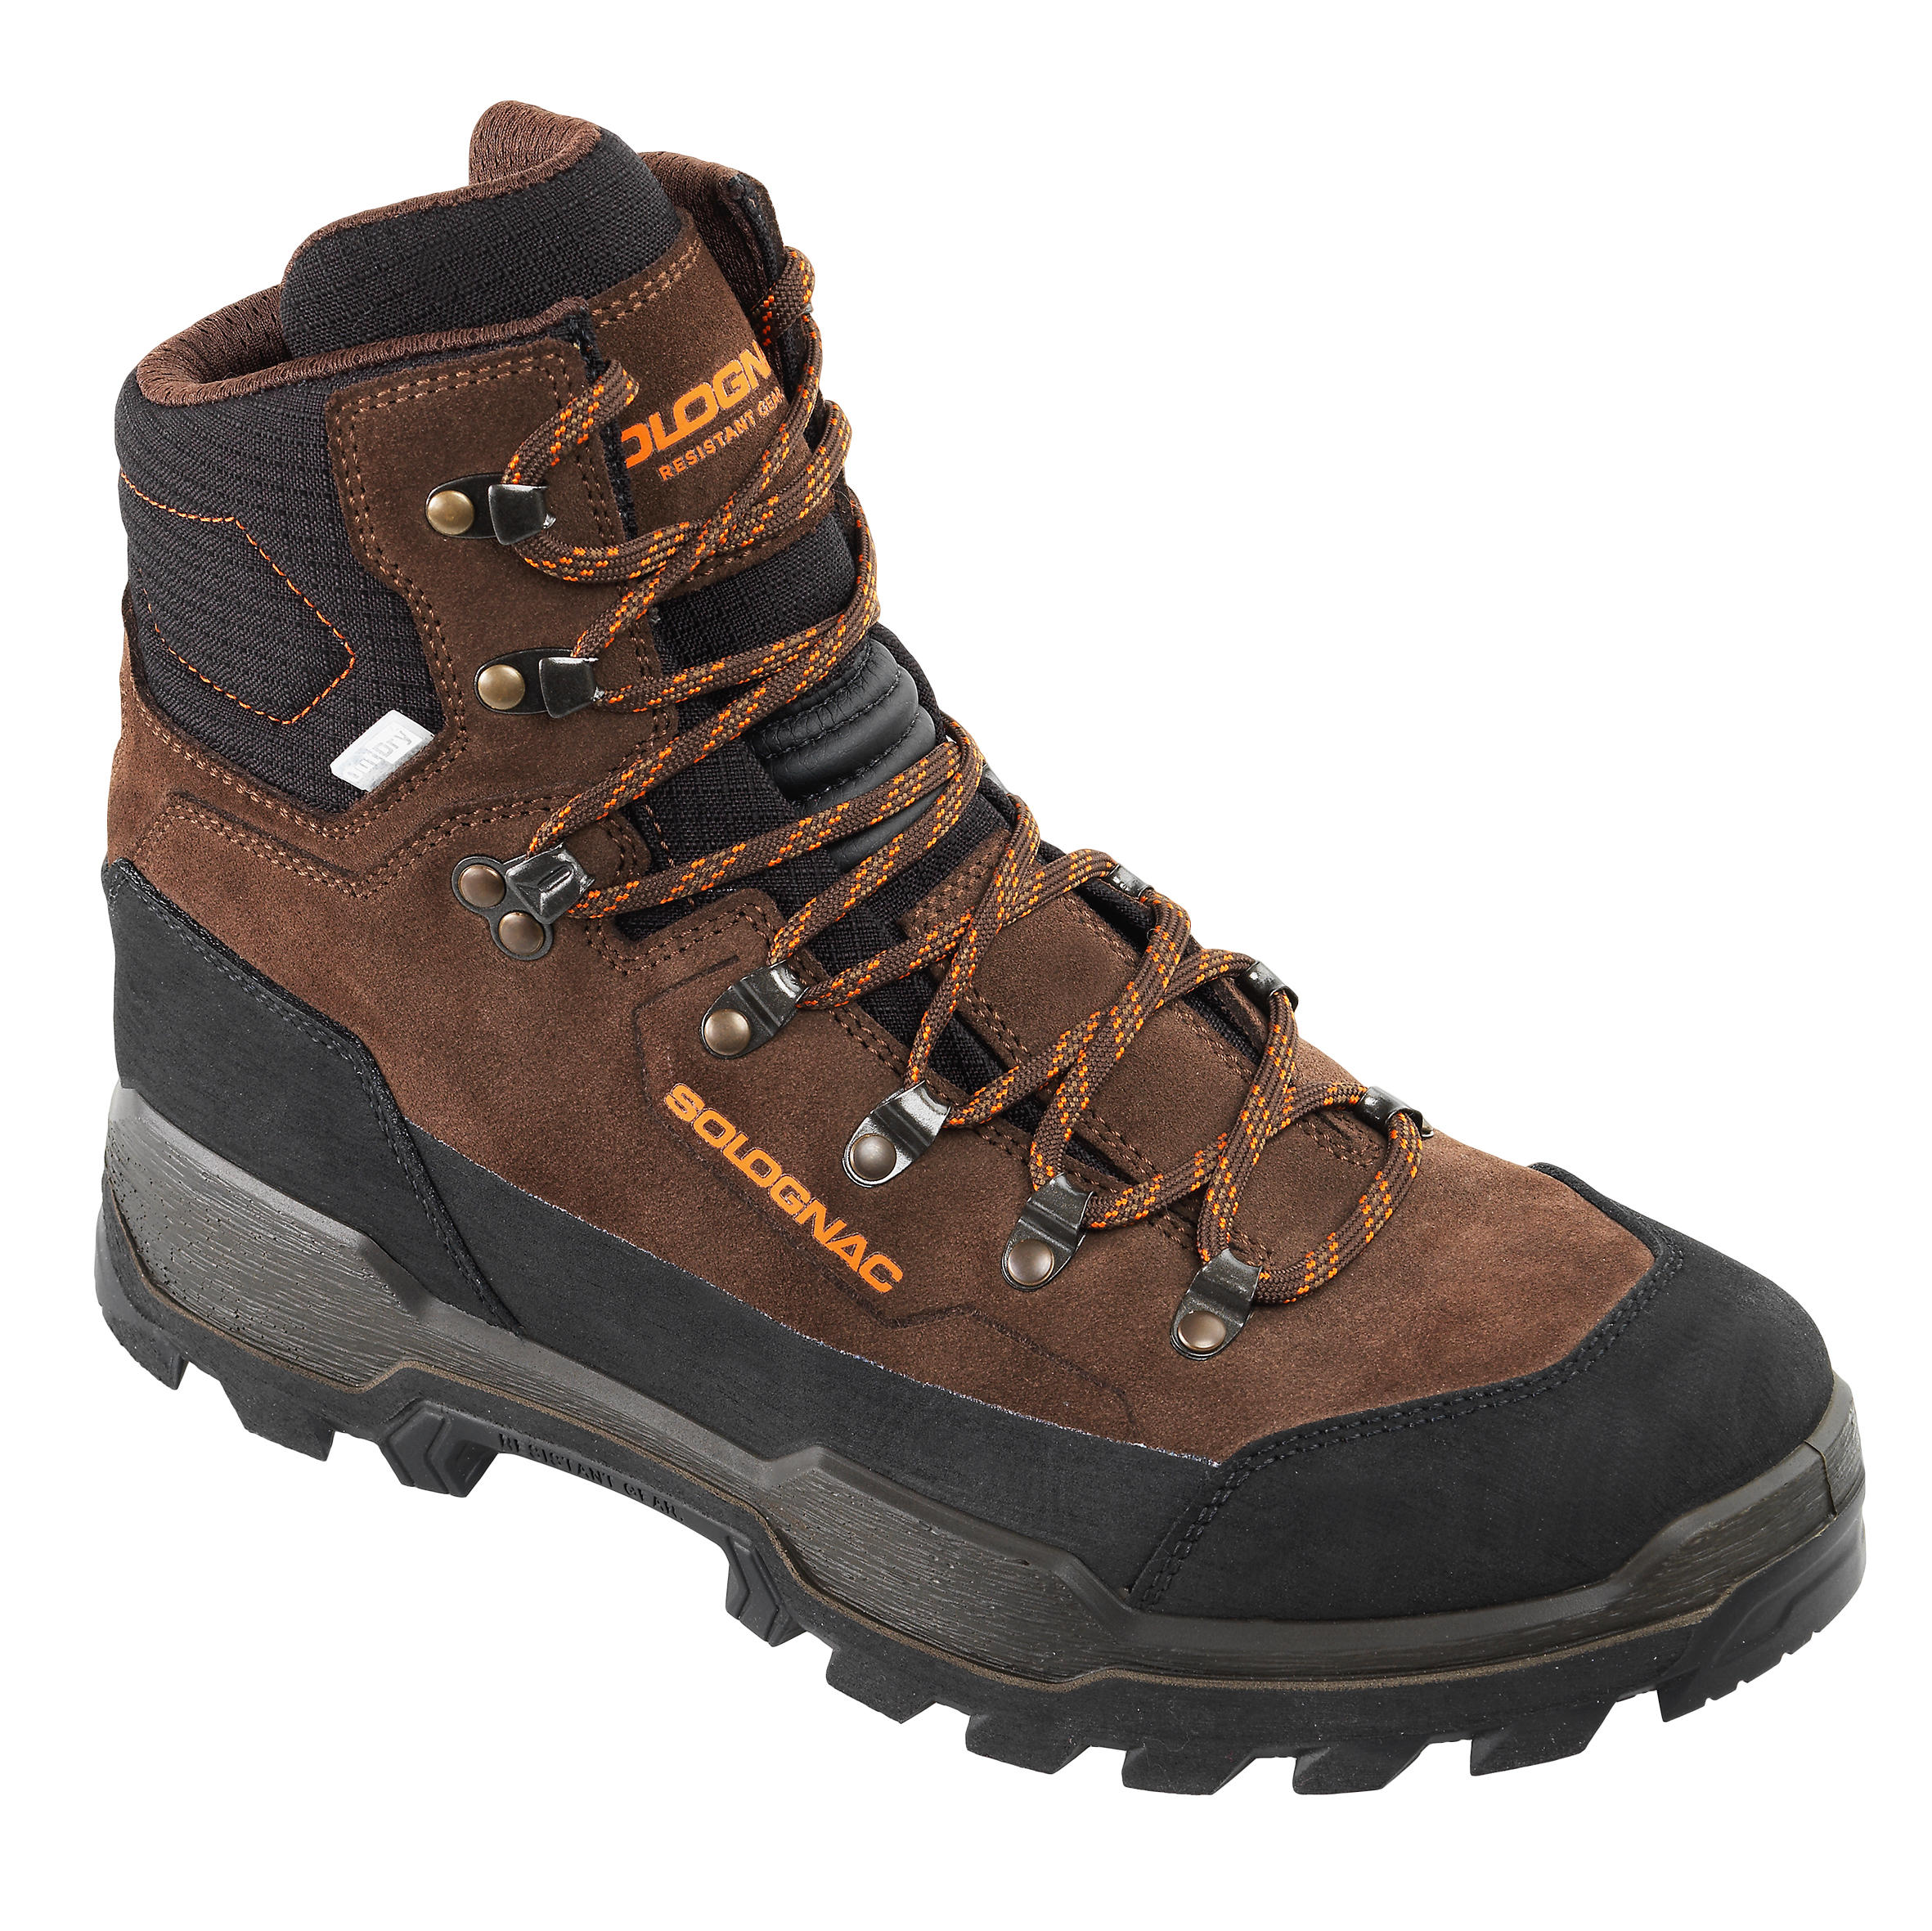 waterproof hiking hunting boots